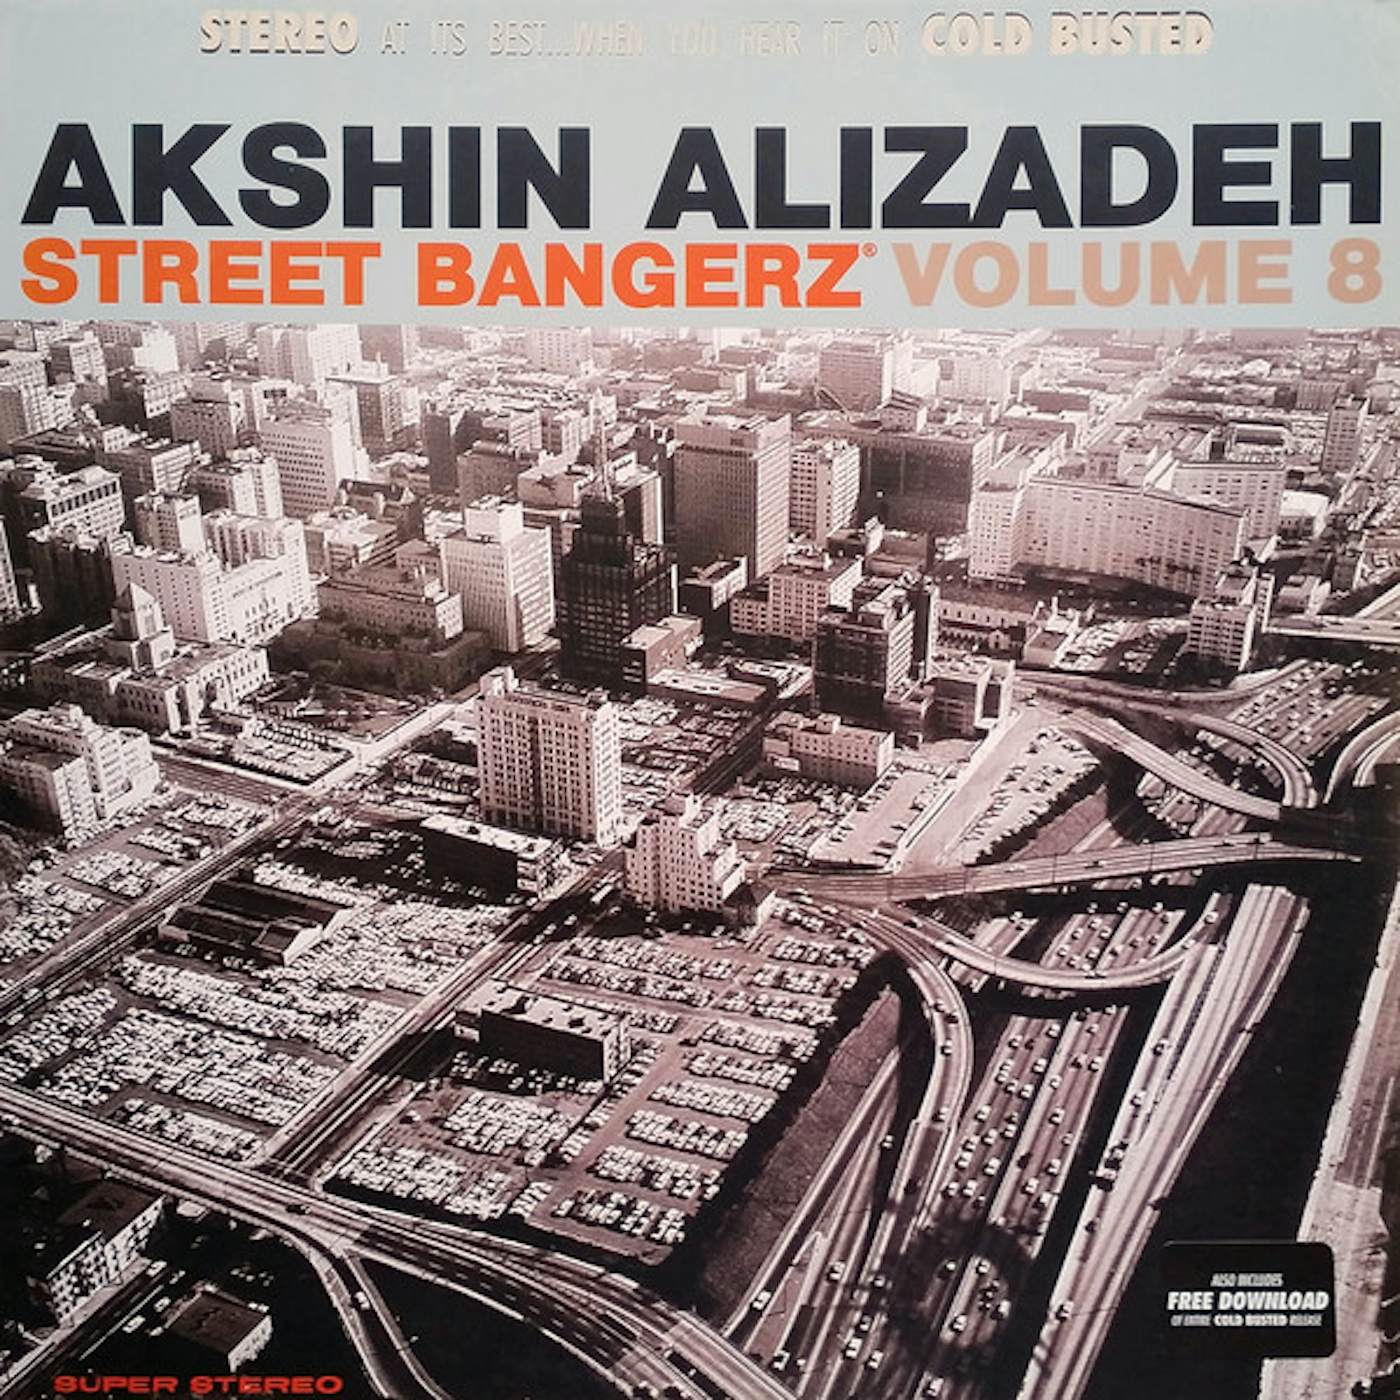 Akshin Alizadeh STREET BANGERZ 8 Vinyl Record